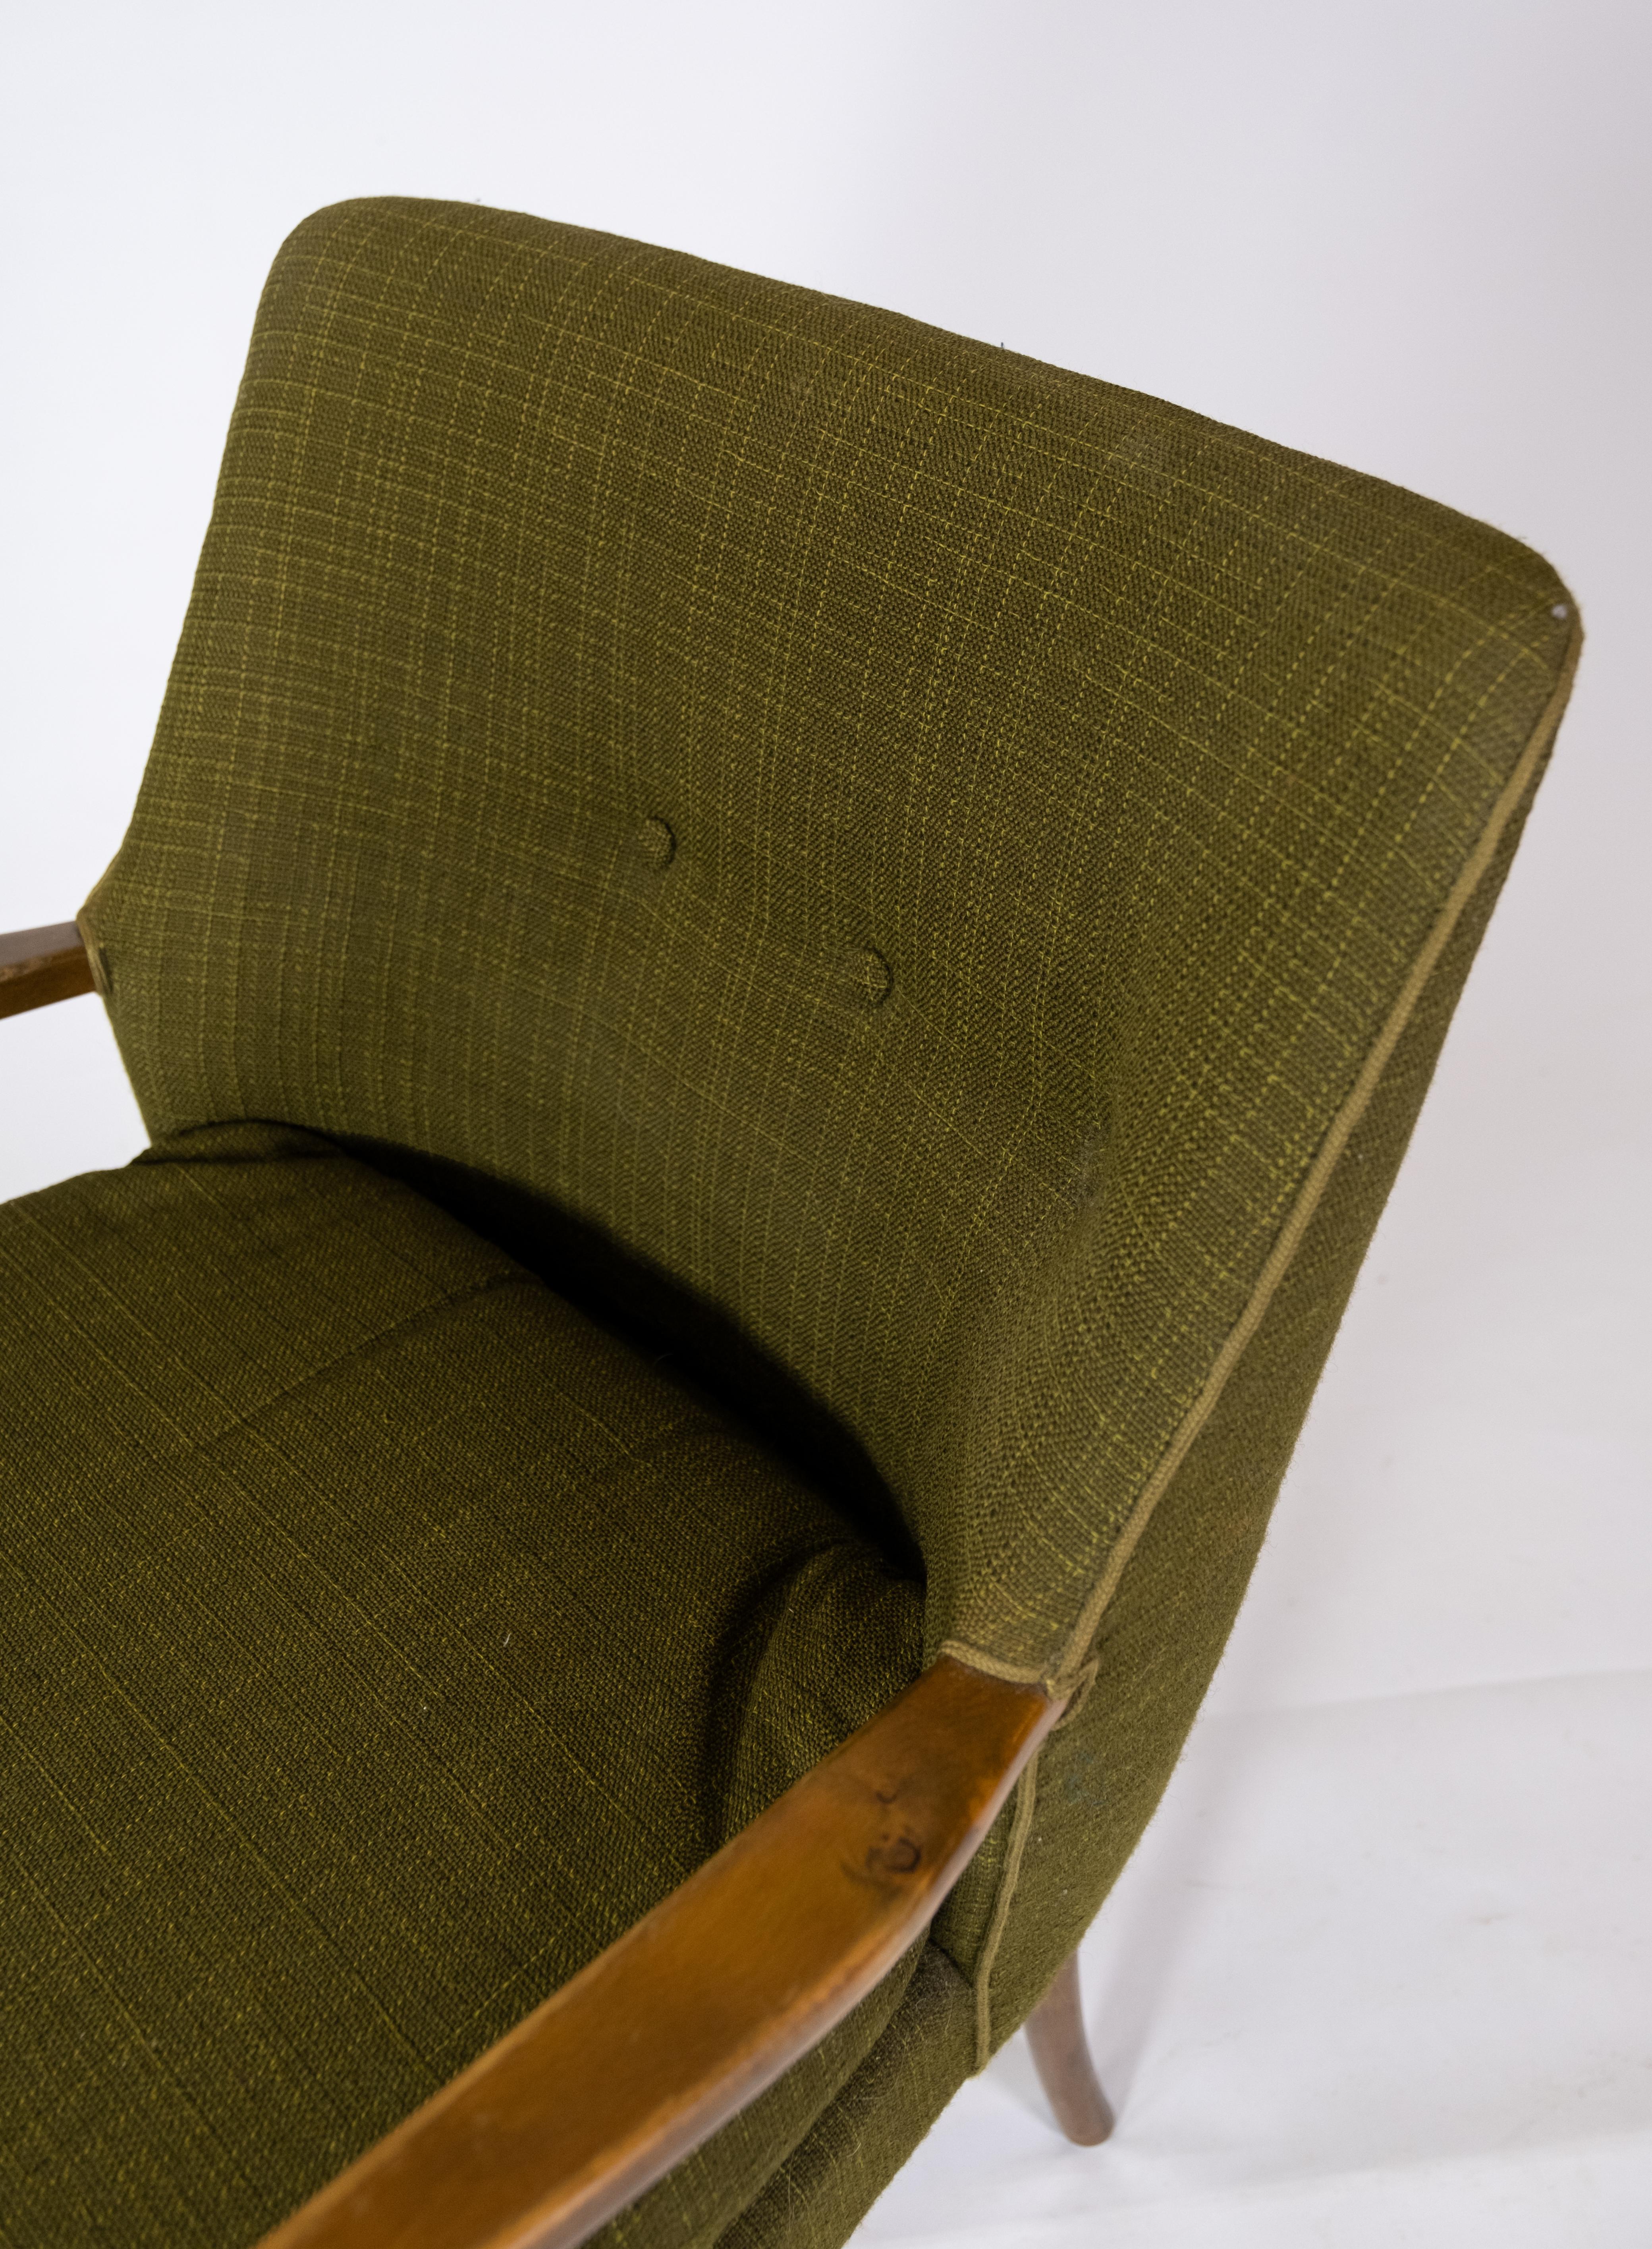 Scandinavian Modern Armchair in Birch and Orginal Dark Green Fabric of Danish Design from the 1950s For Sale